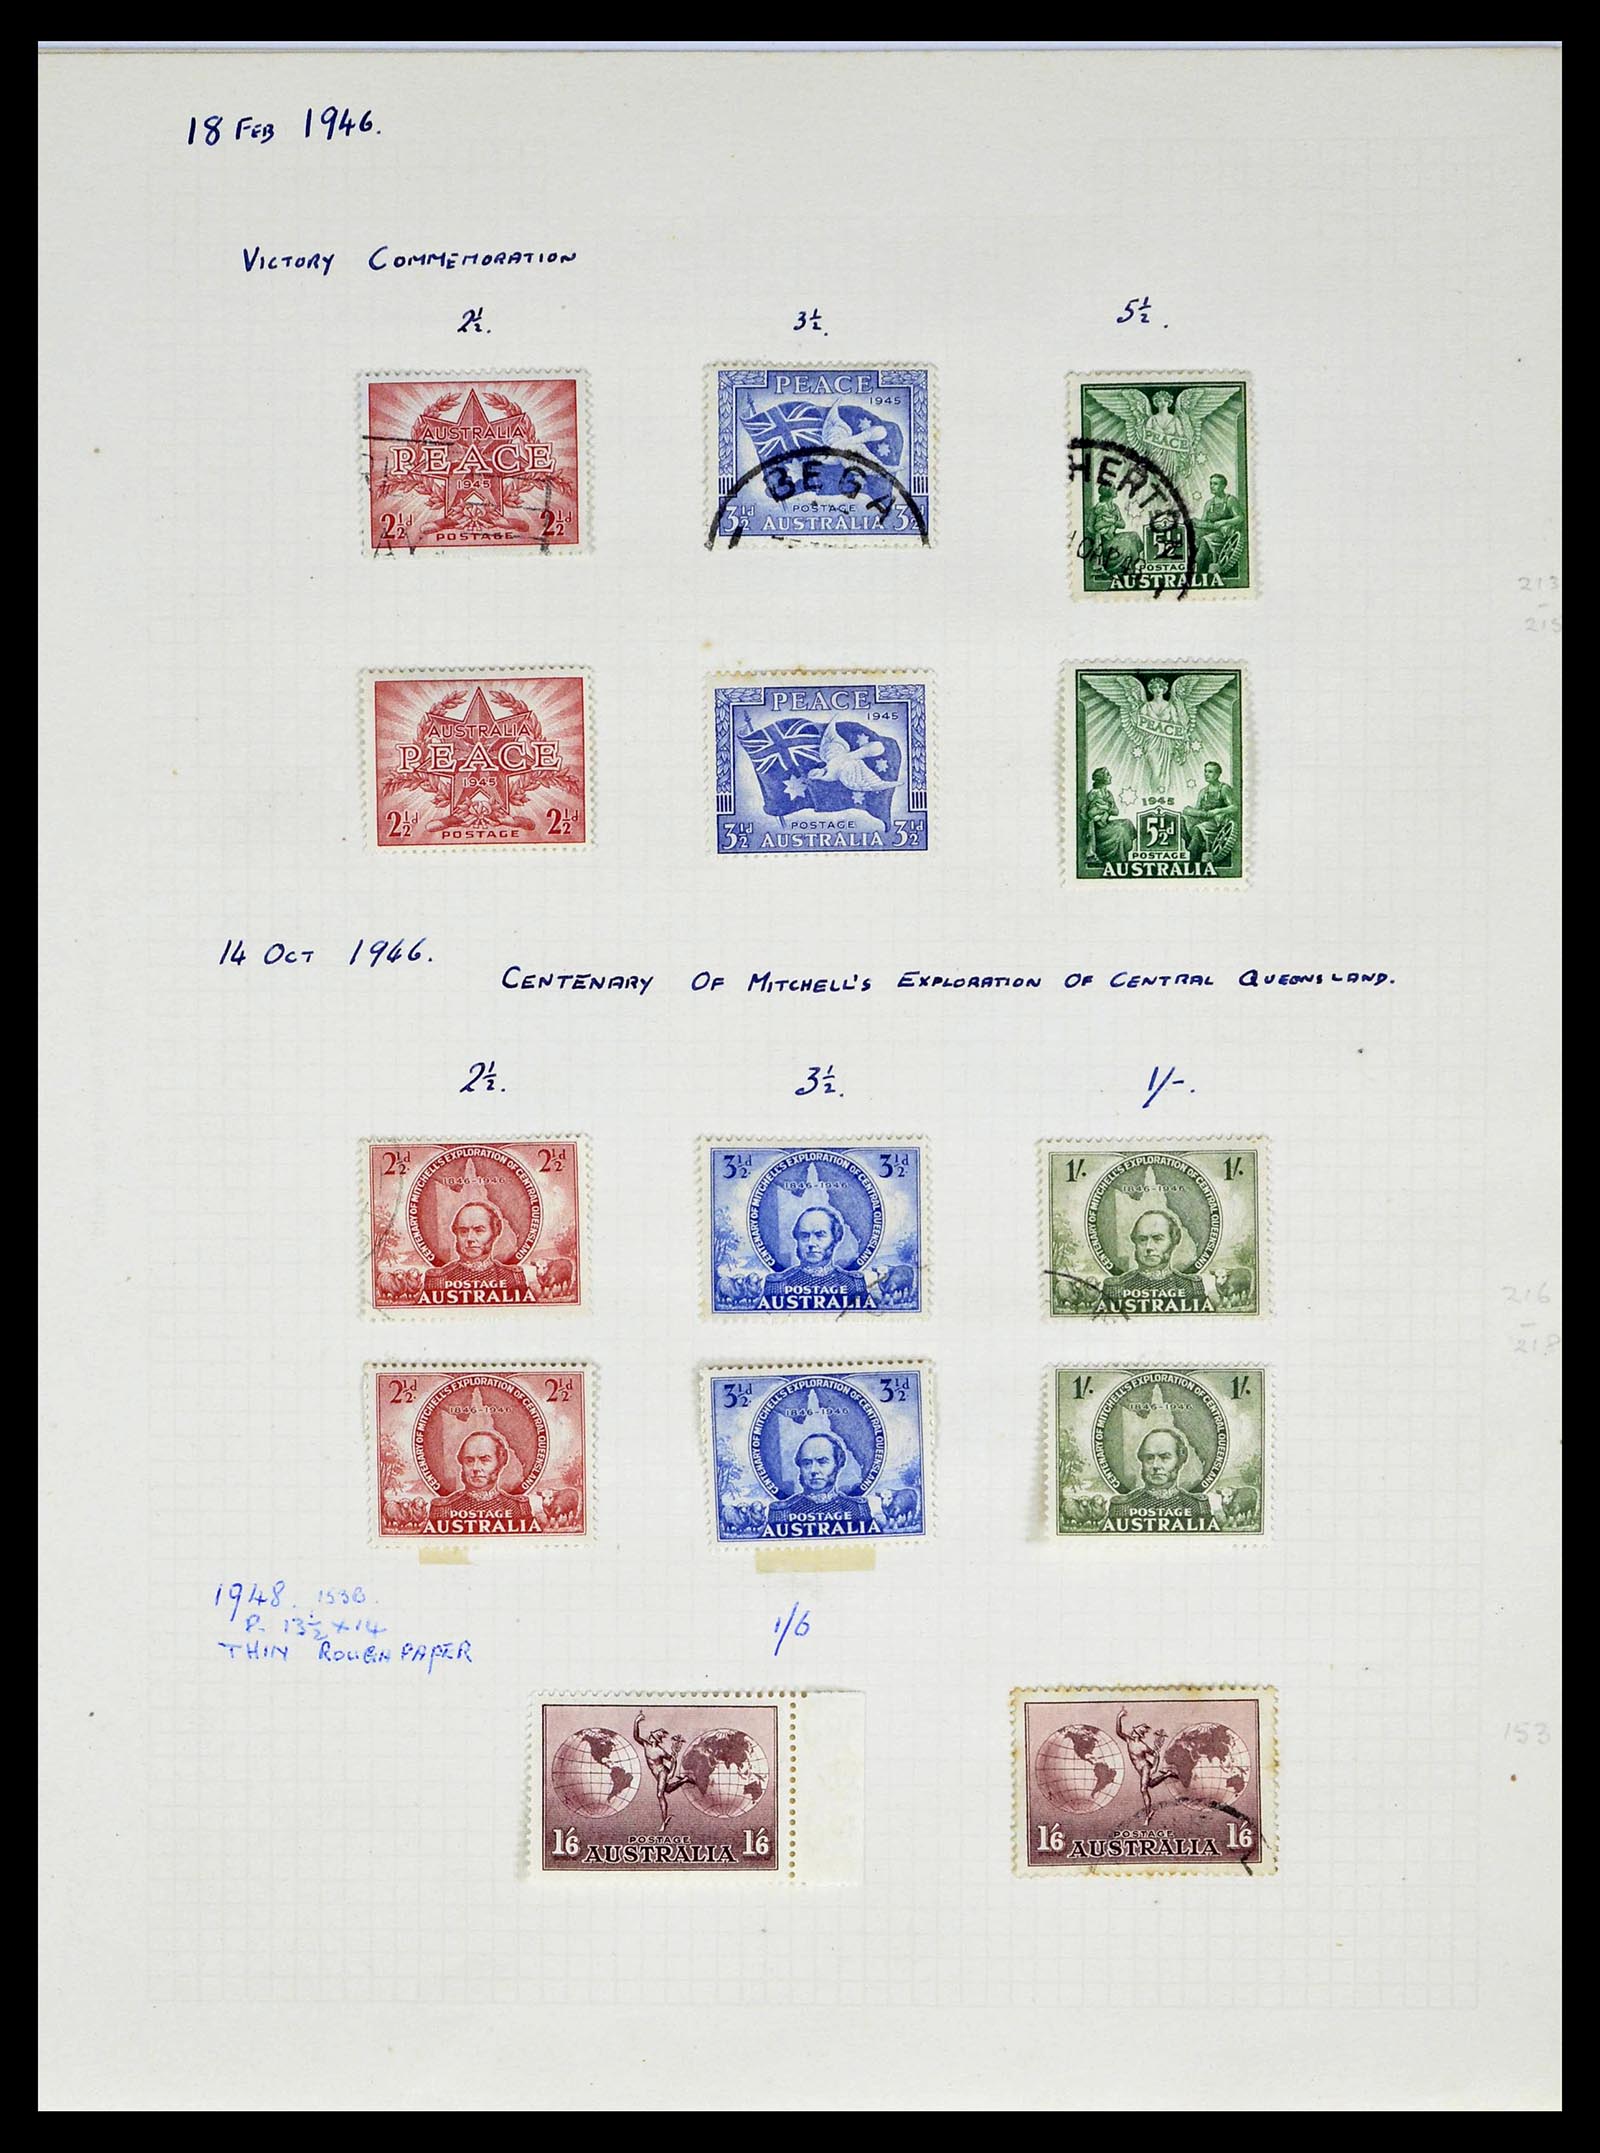 39166 0030 - Stamp collection 39166 Australia 1913-1949.